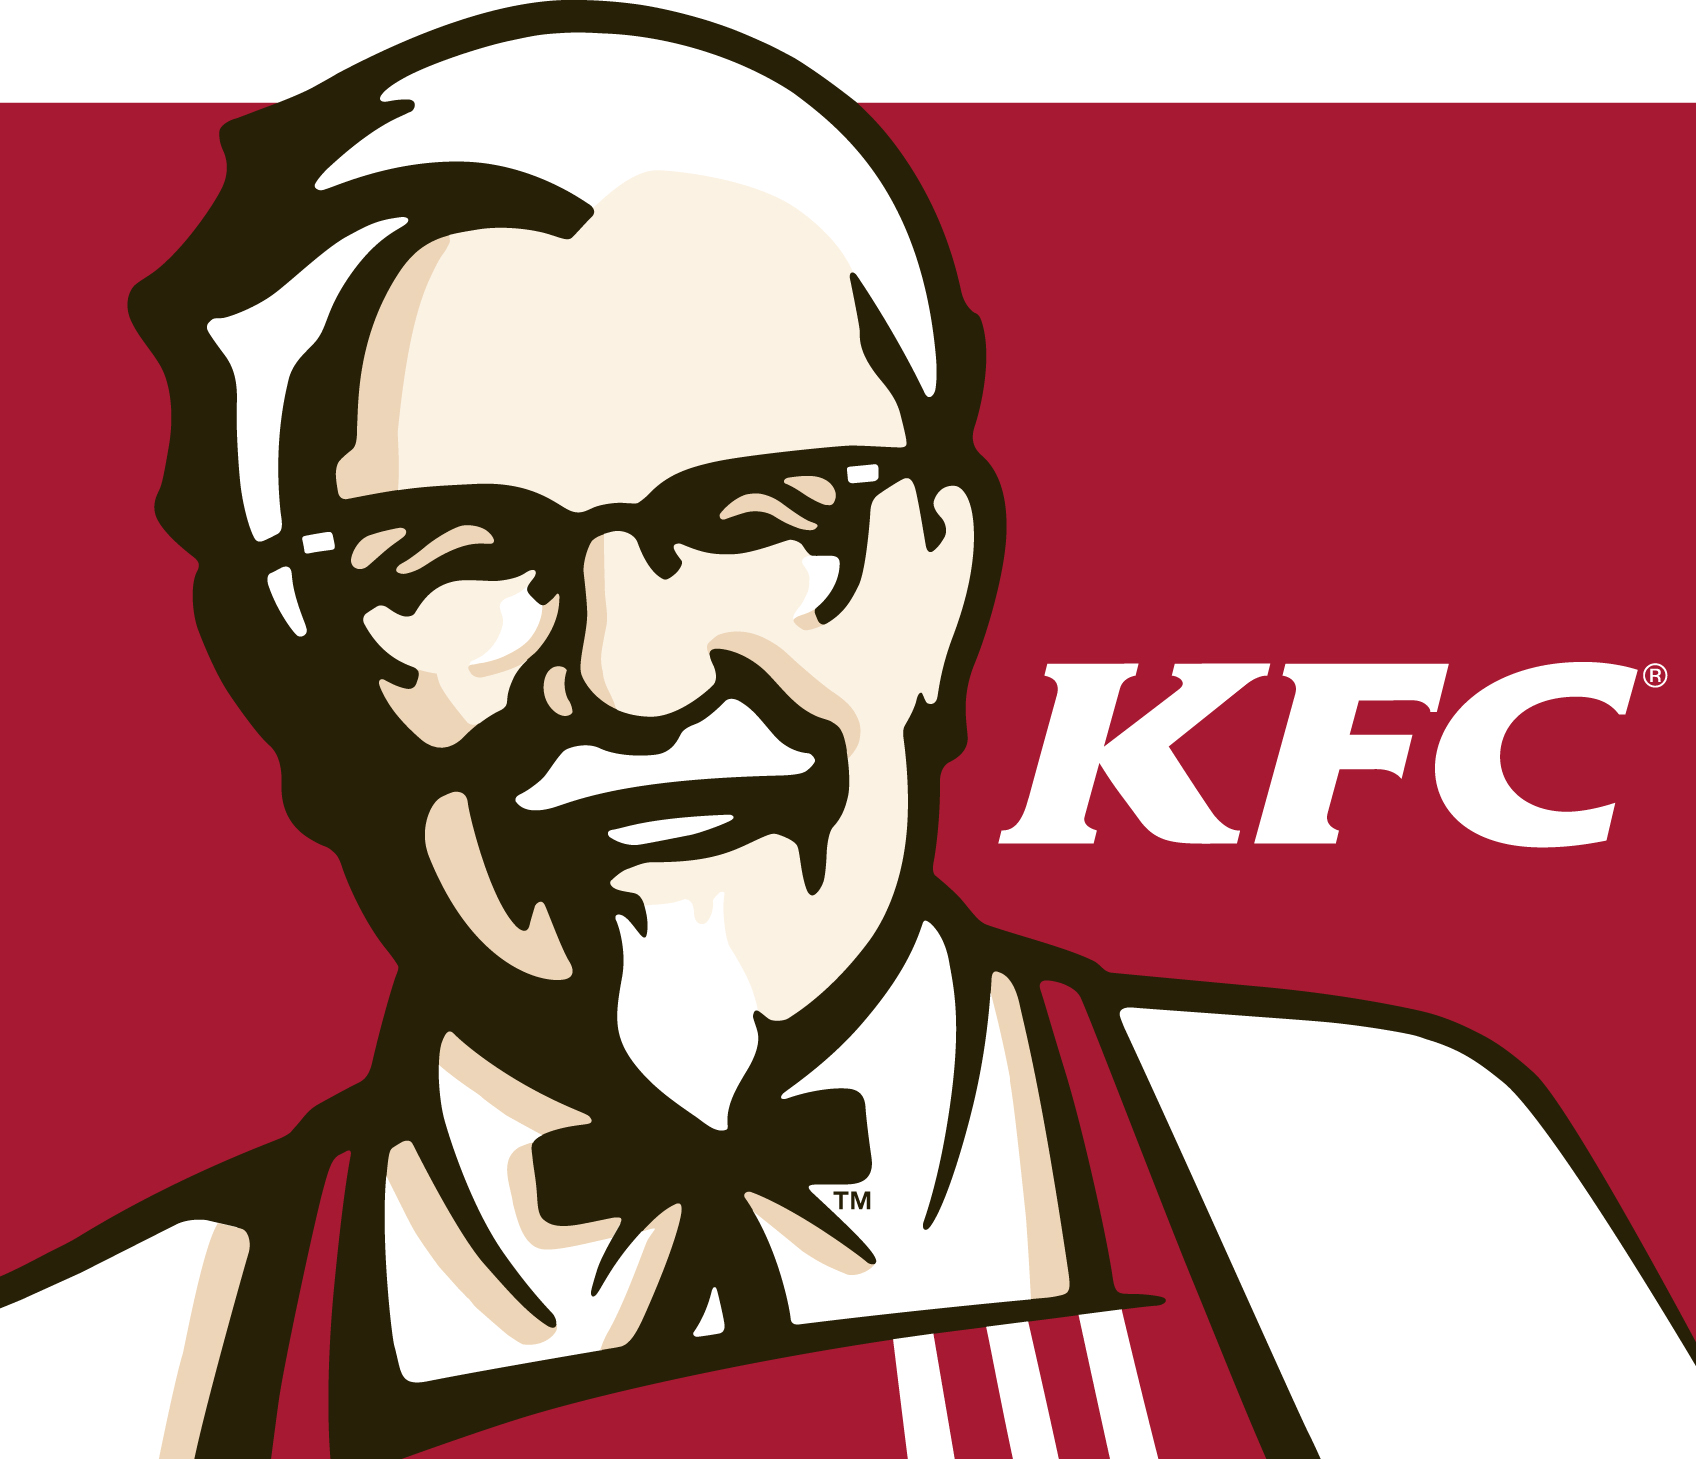 Kentucky Fried Chicken Logo - Kentucky Fried Chicken Logo wallpaper 2018 in Brands & Logos